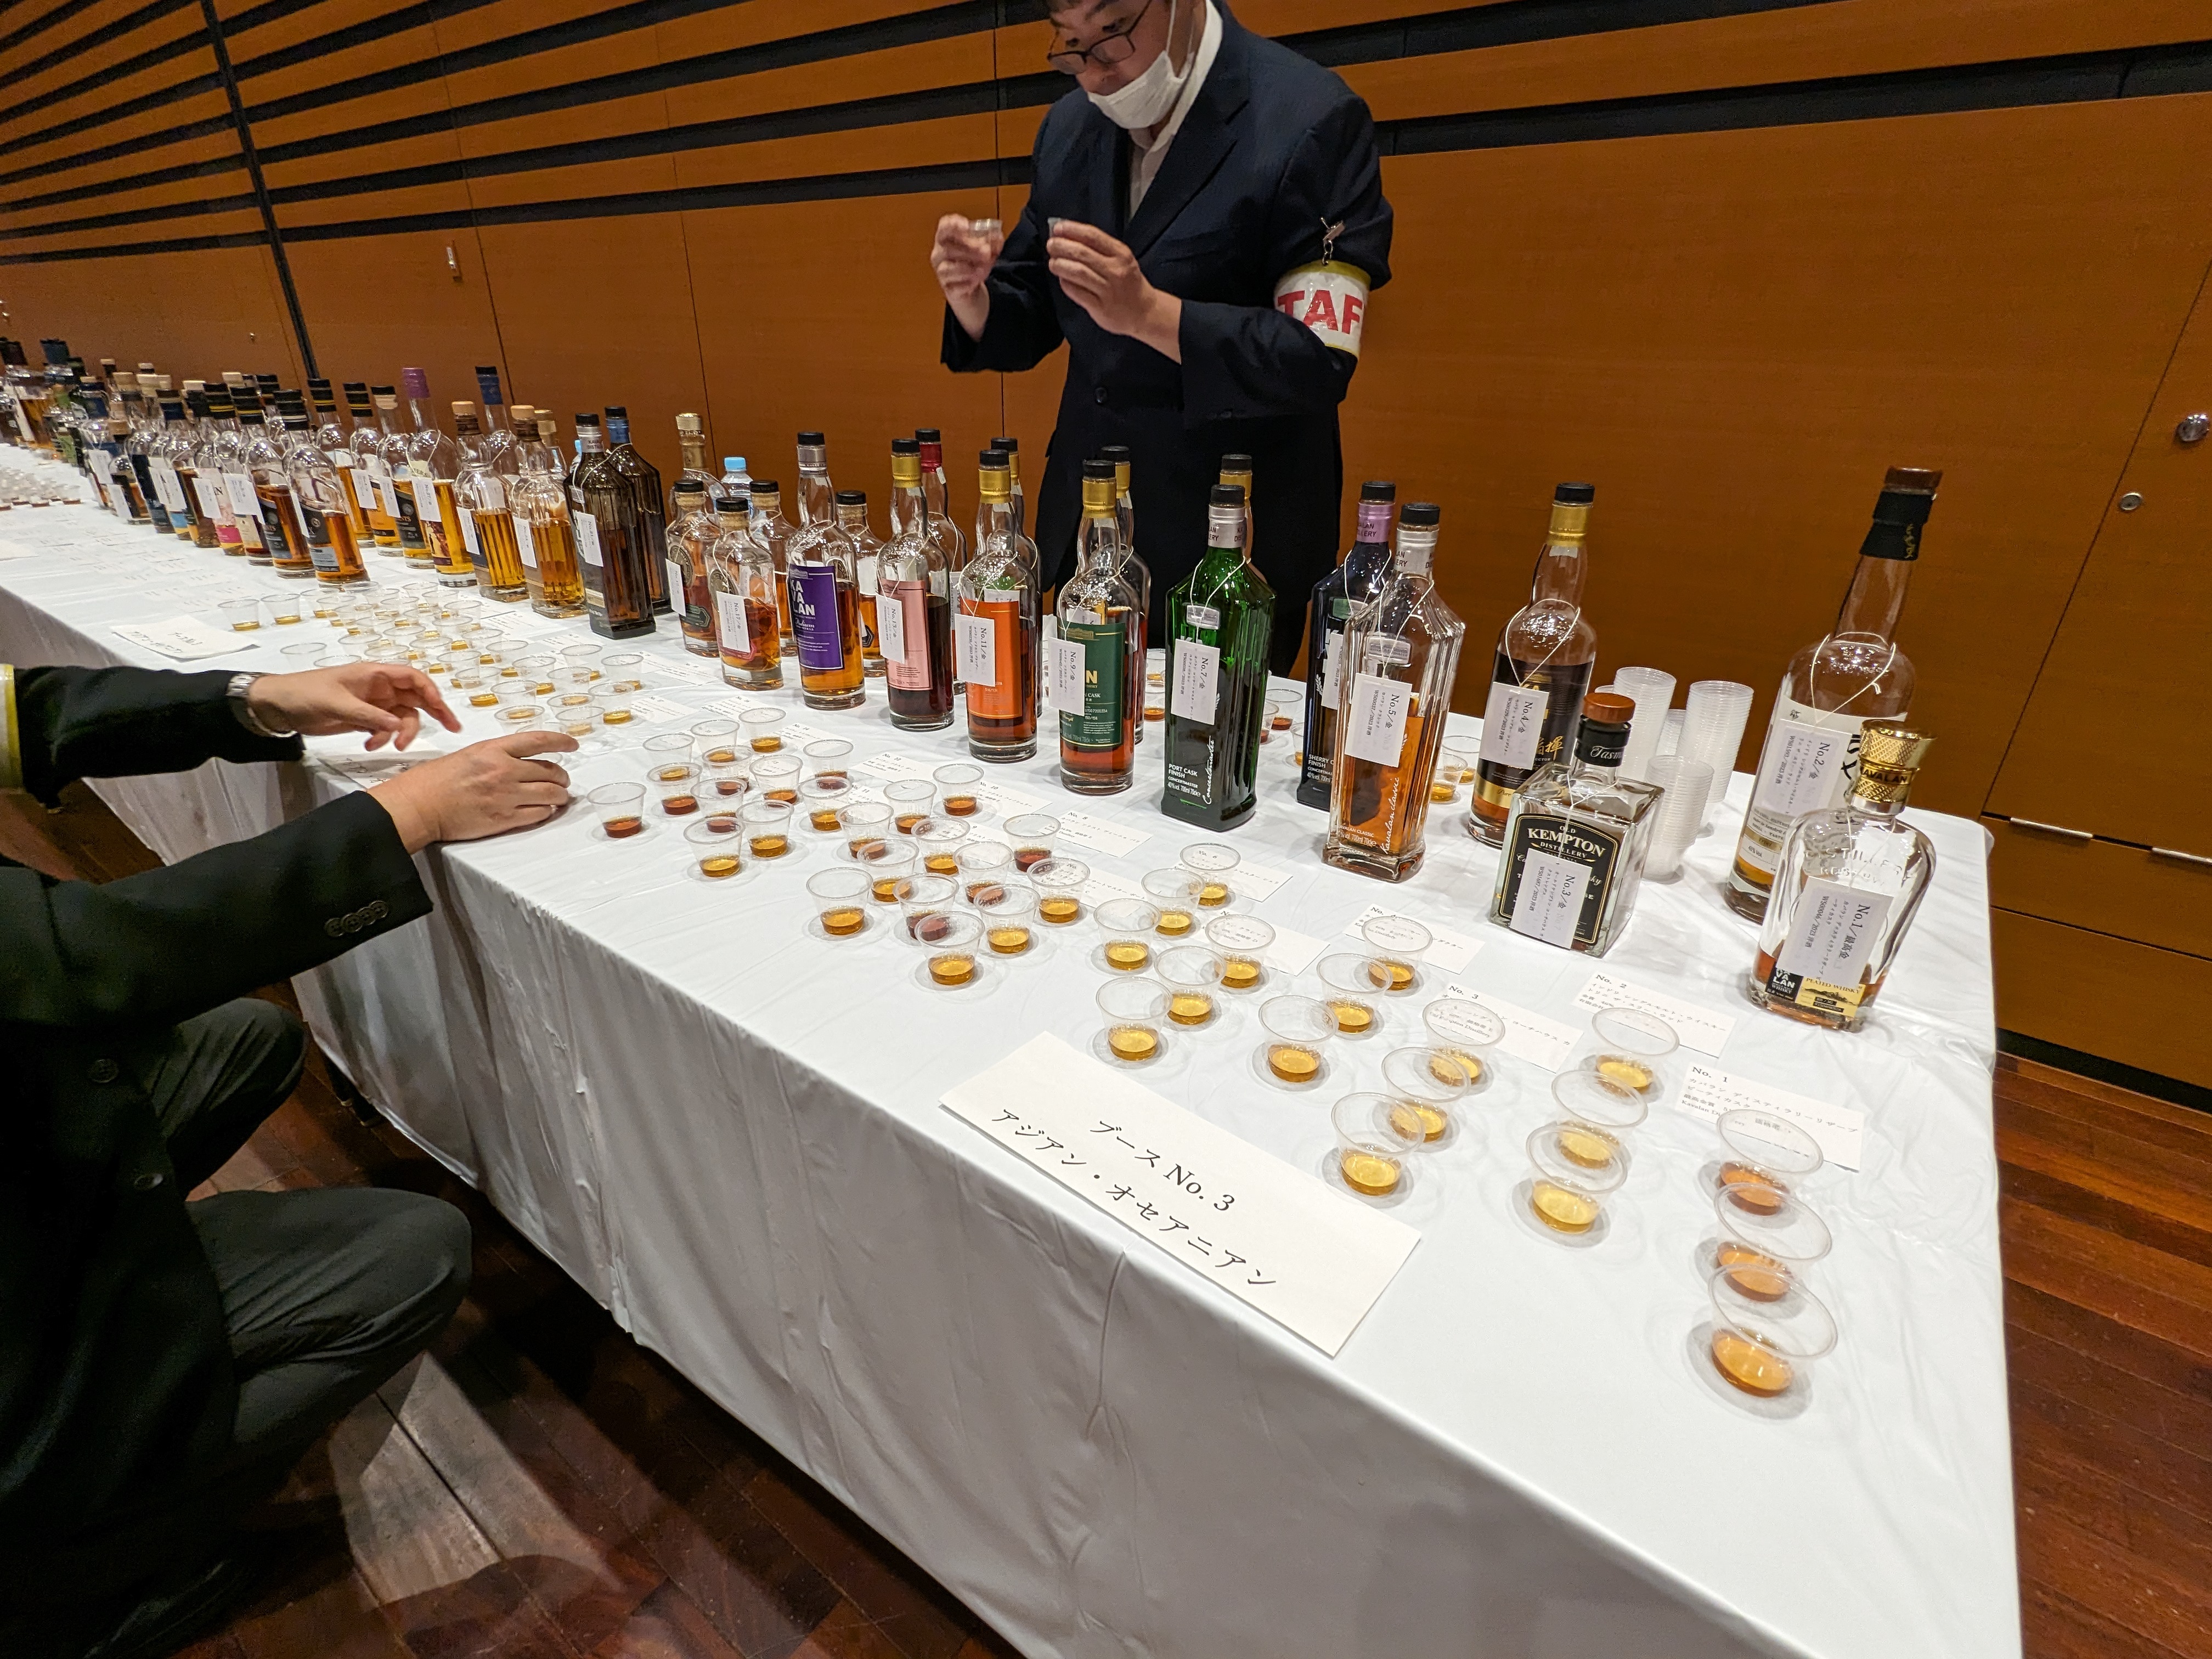 Plenty of free tastings of Japanese whisky as well